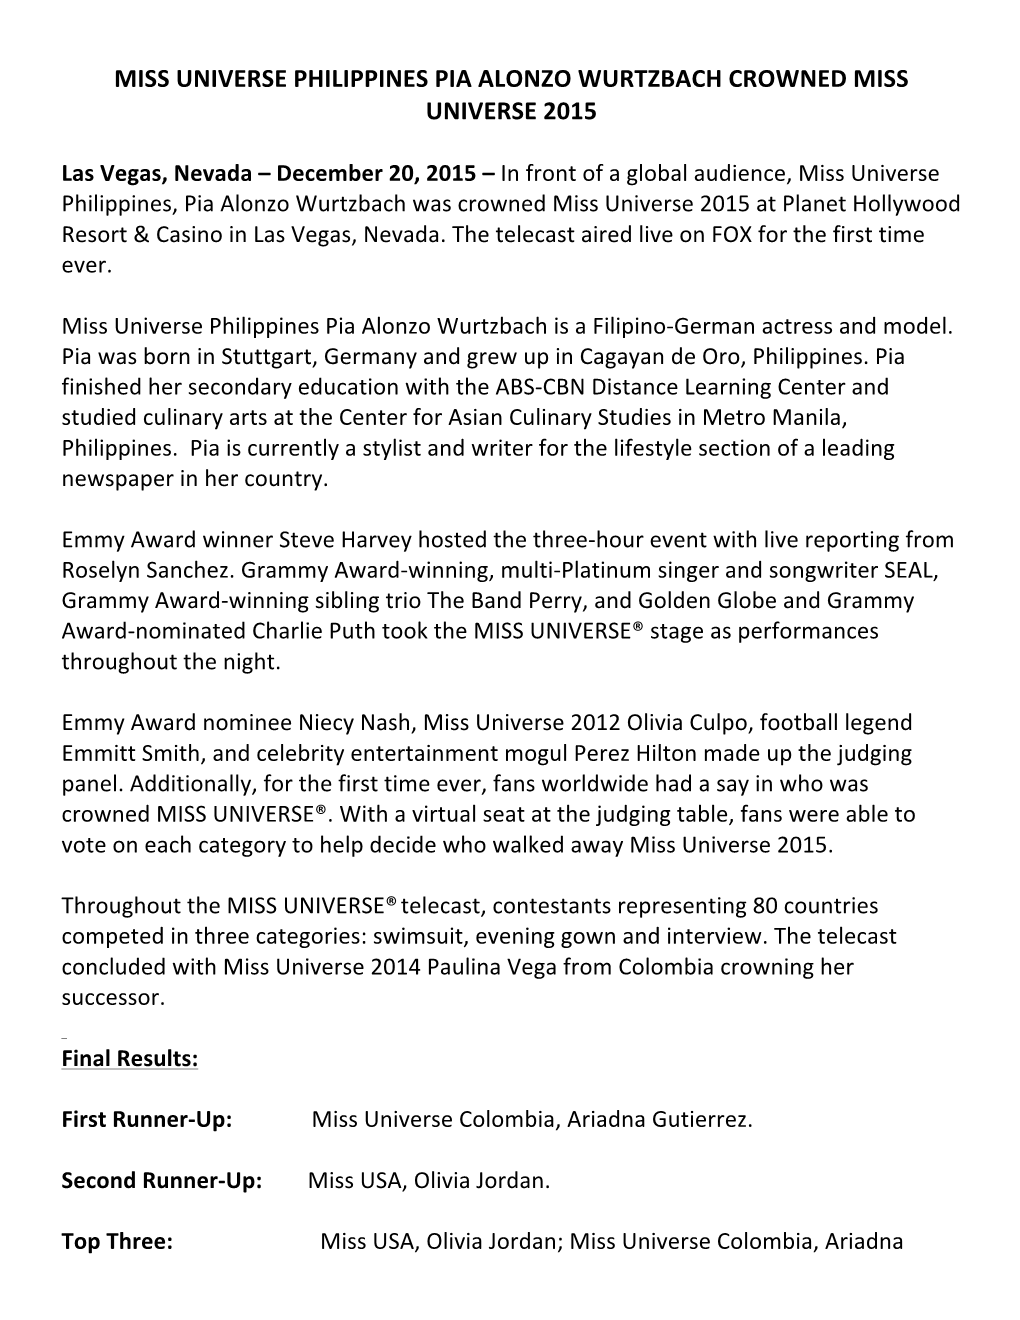 Miss Universe Philippines Pia Alonzo Wurtzbach Crowned Miss Universe 2015